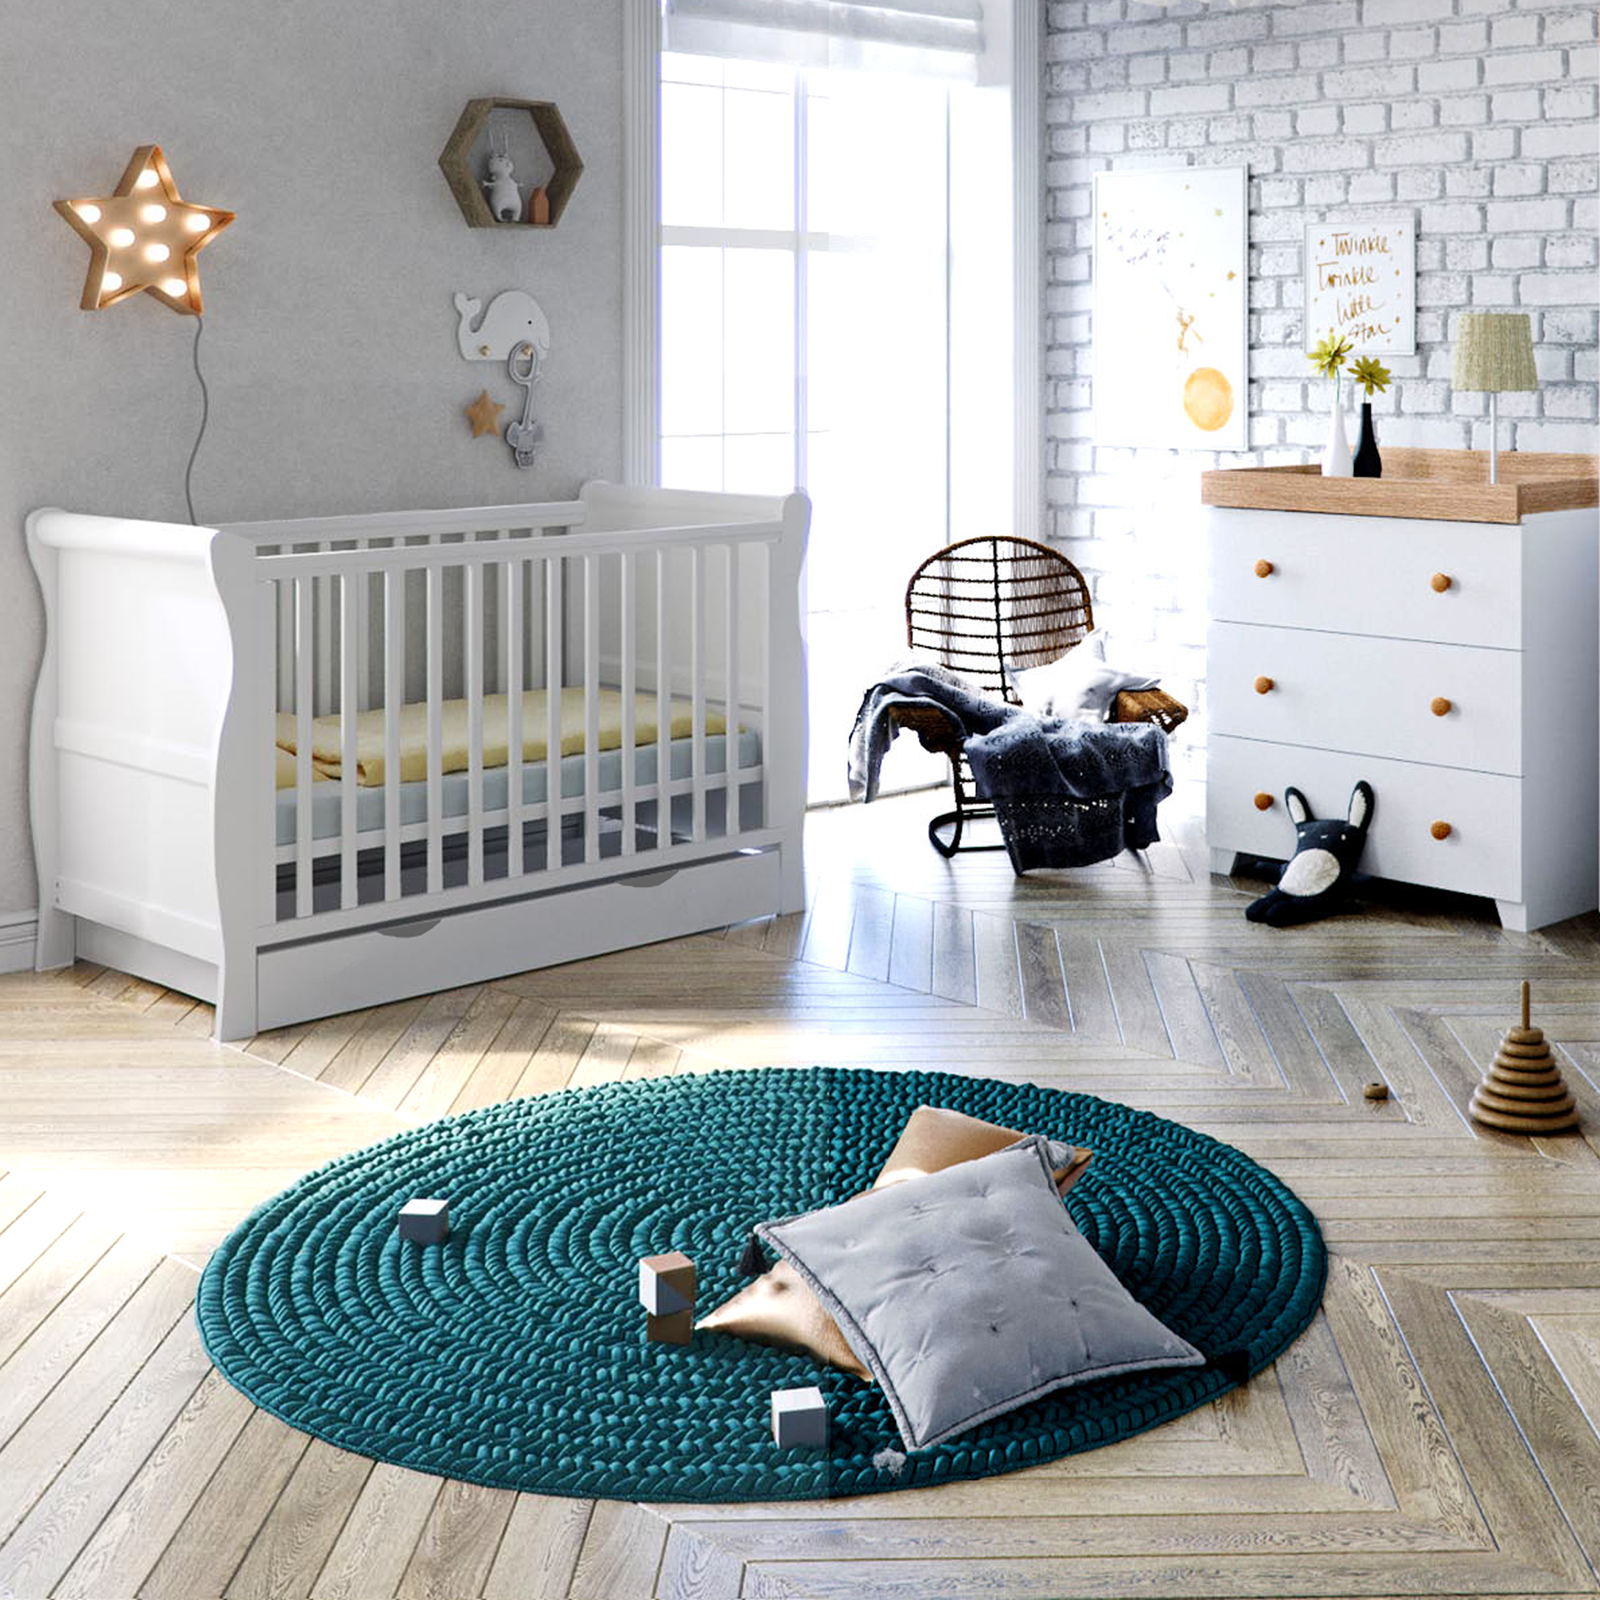 Puggle Alderley Sleigh Cot Bed 5 Piece Nursery Furniture Set With Eco Fibre Mattress - White